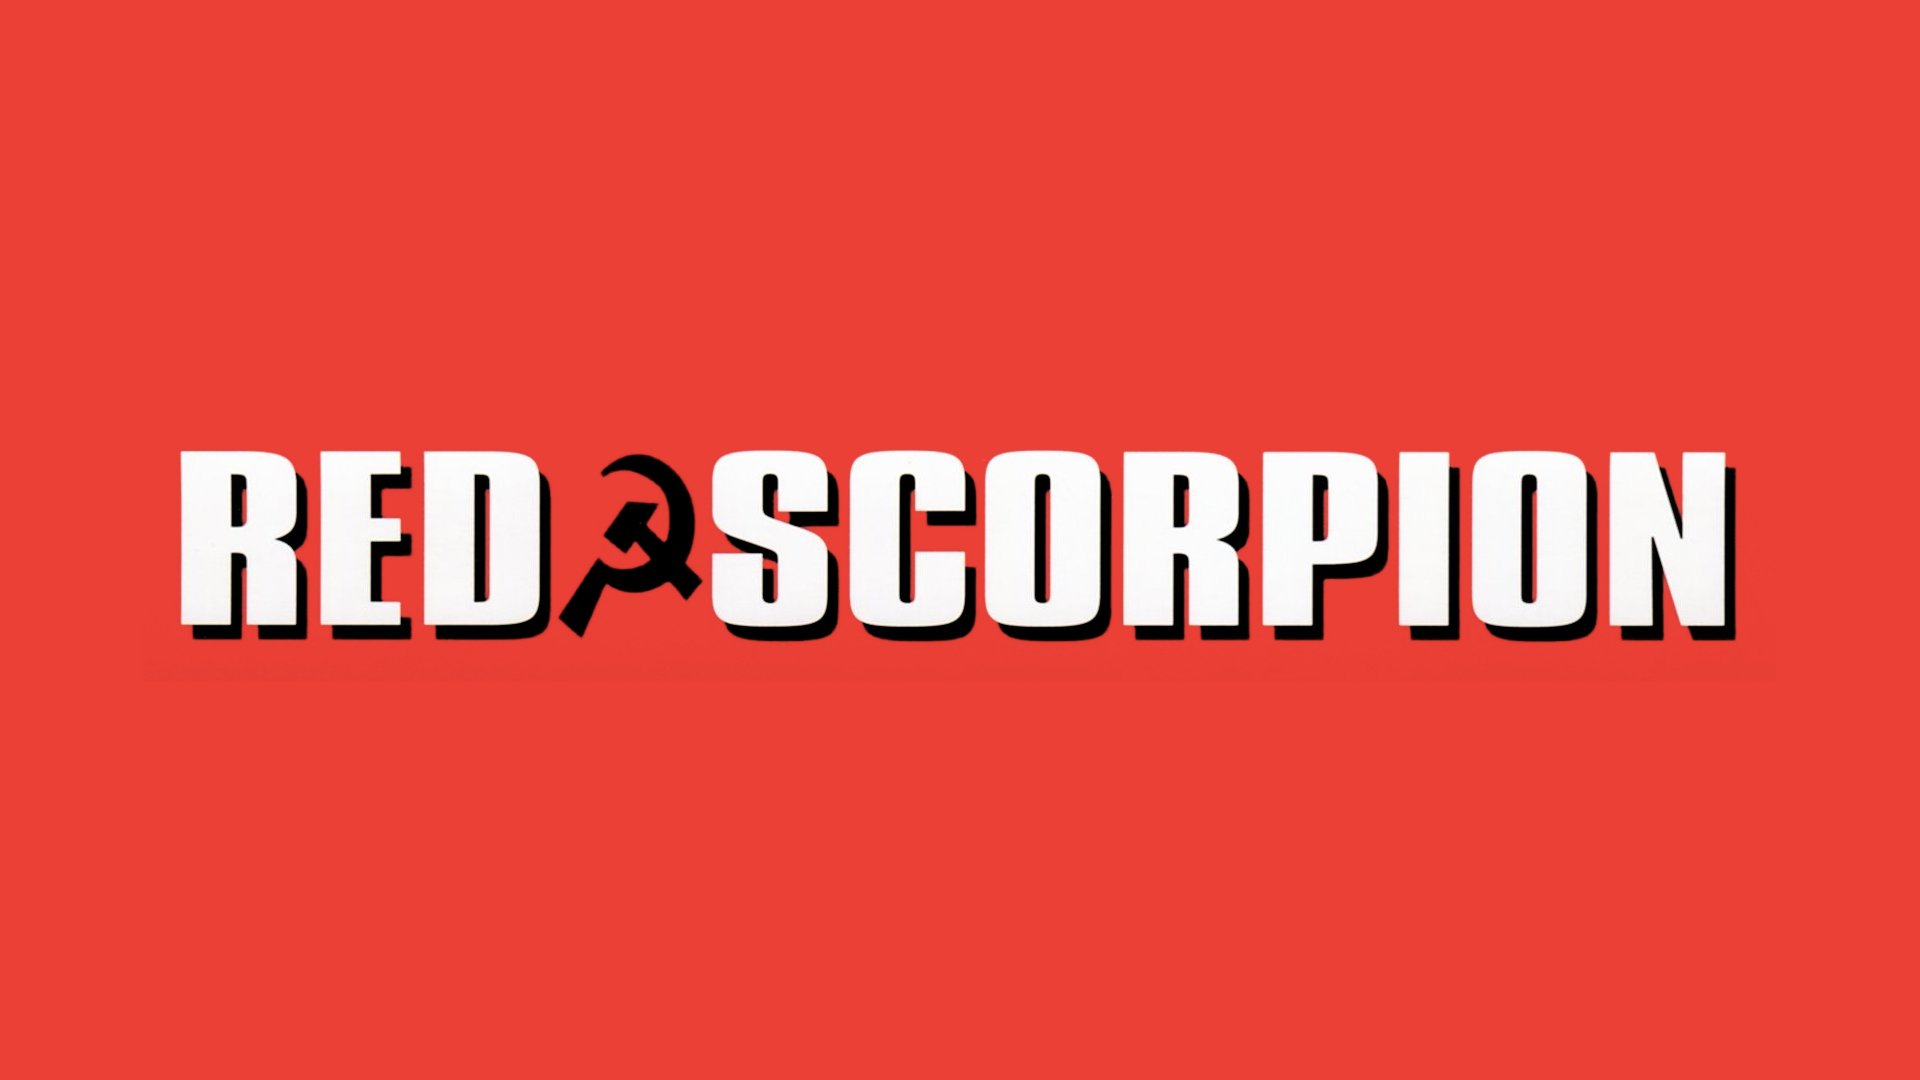 Красный скорпион – афиша